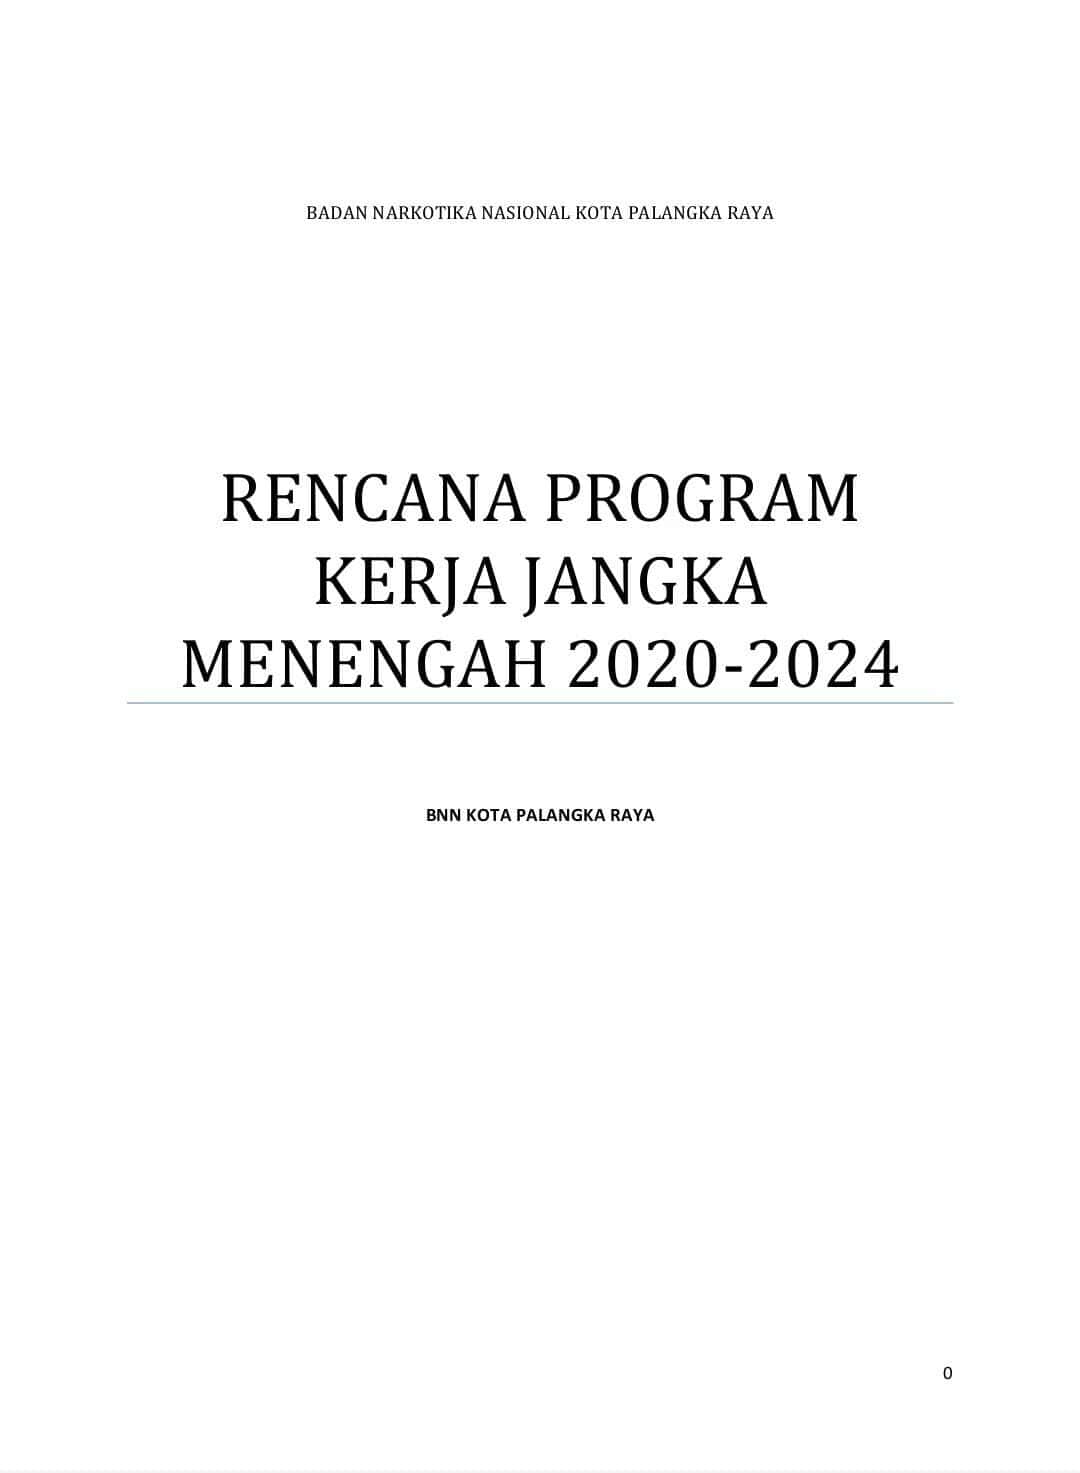 RENPROJA BNN KOTA PALANGKA RAYA 2020-2024